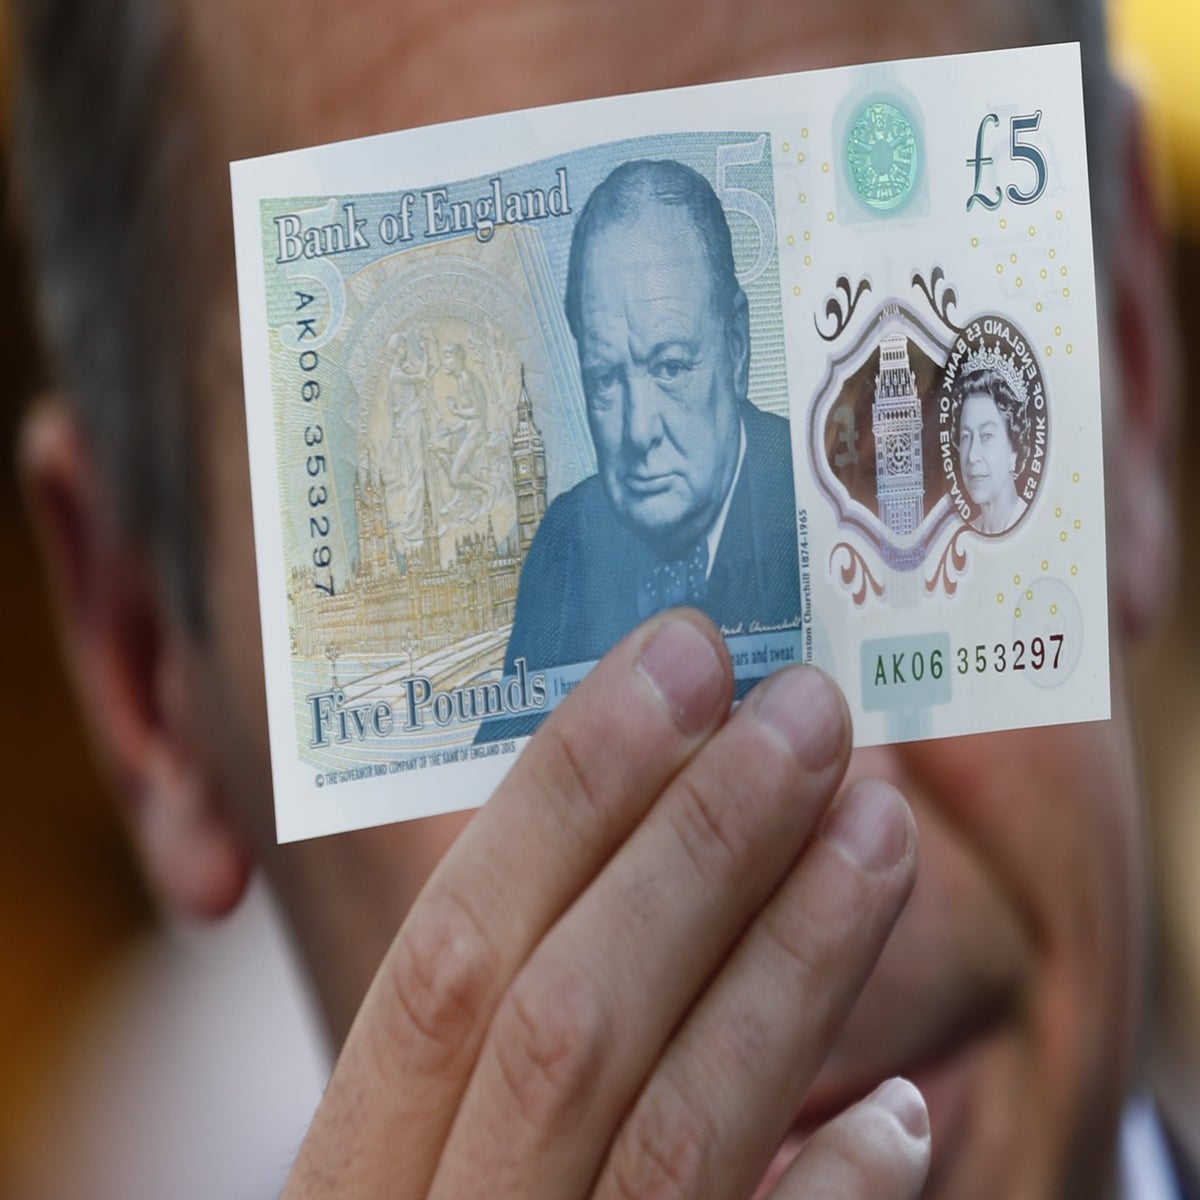 5 pounds banknote, Queen Elizabeth II, Winston Churchill, UK, 2015